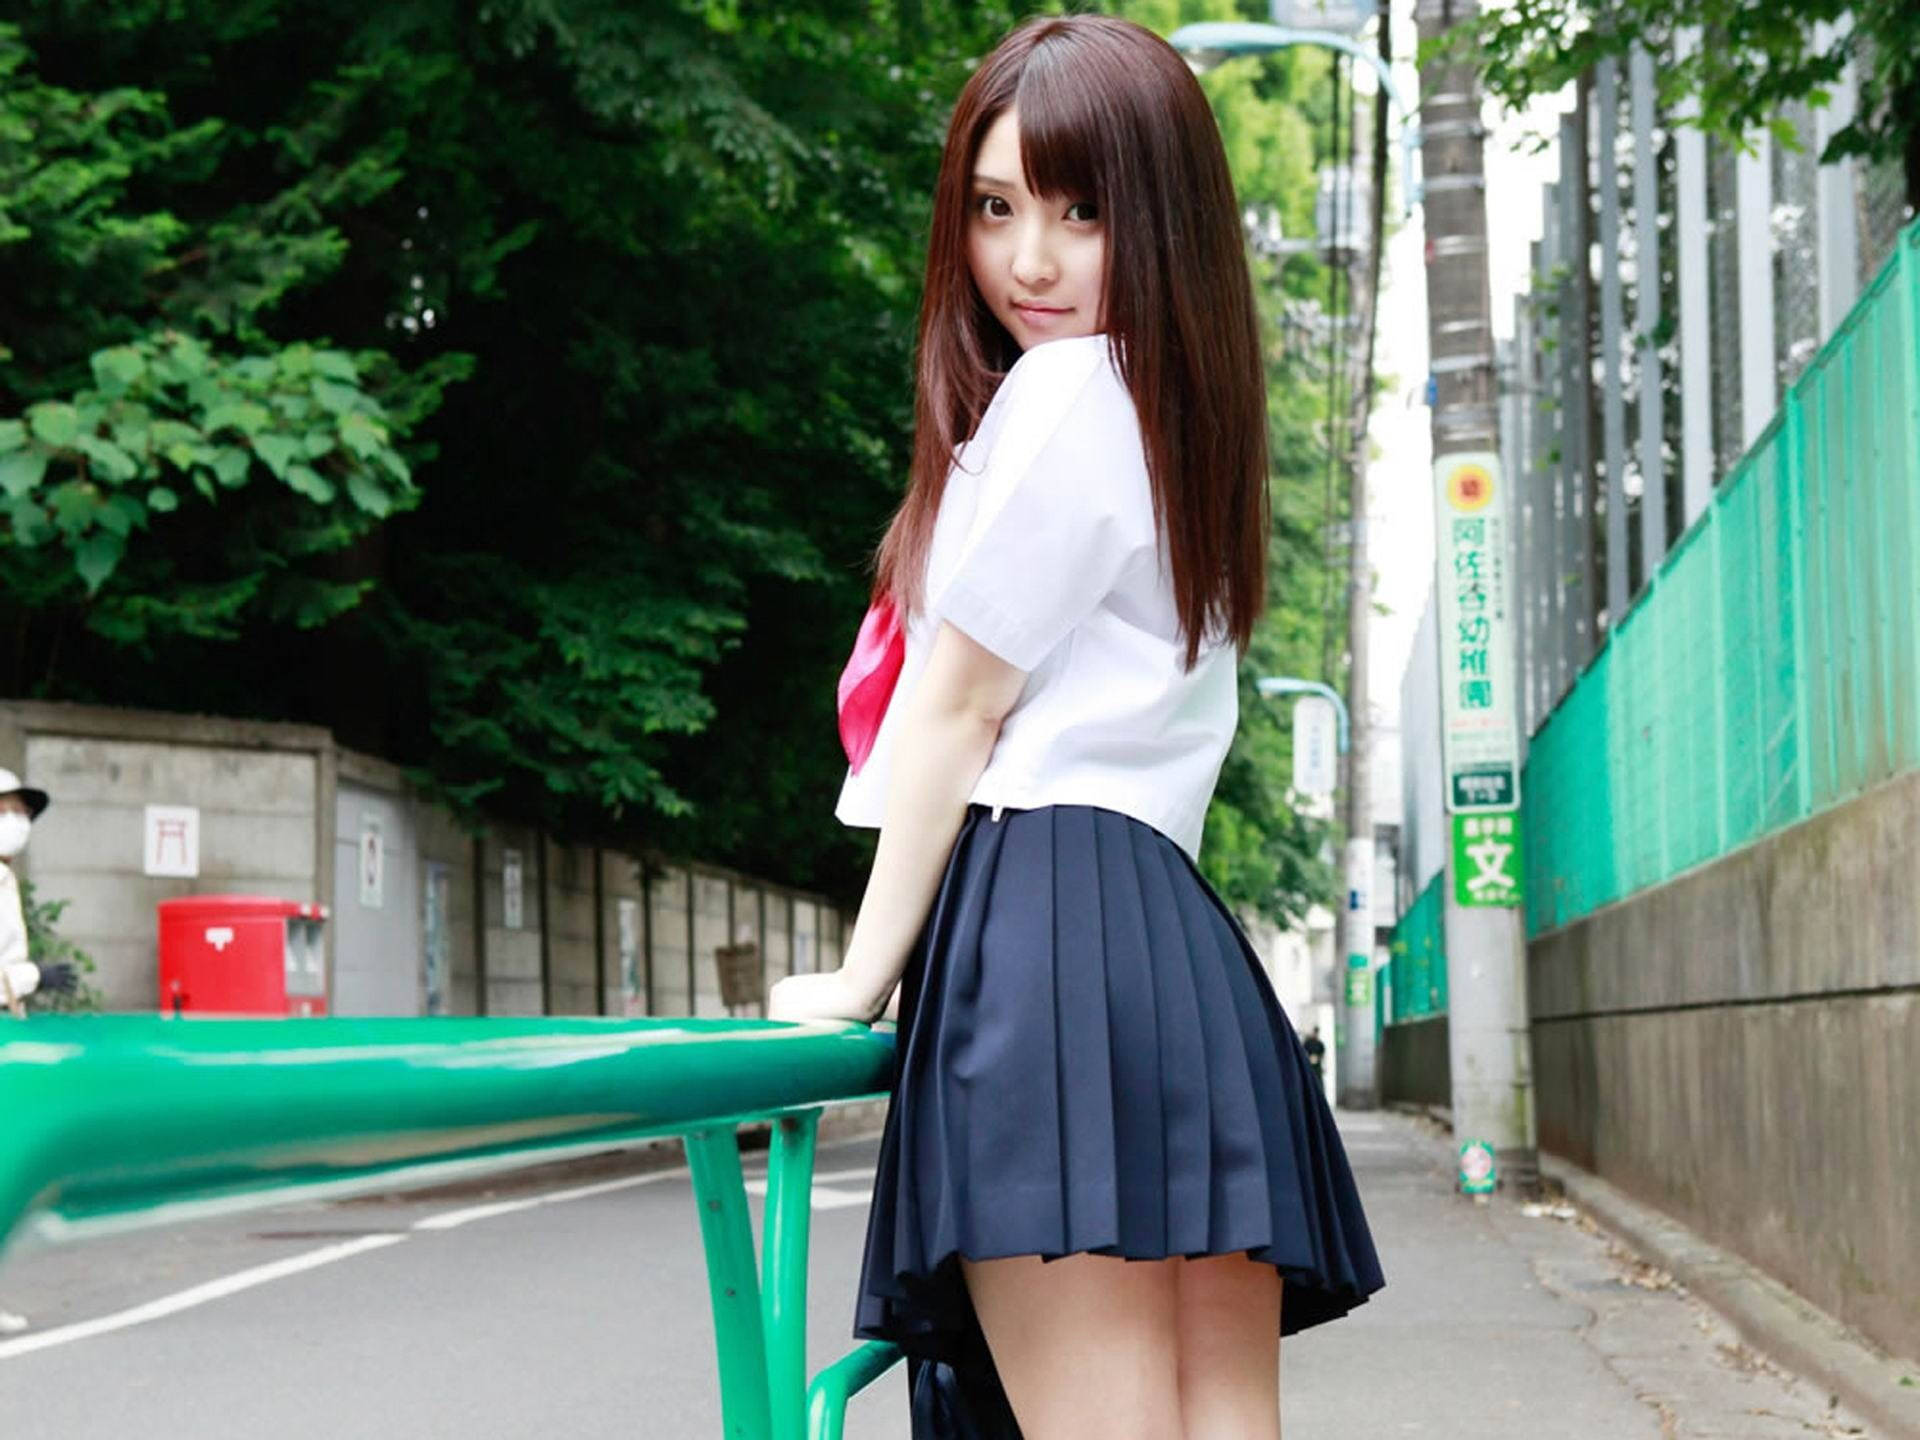 Japanese Girl In School Uniform Background